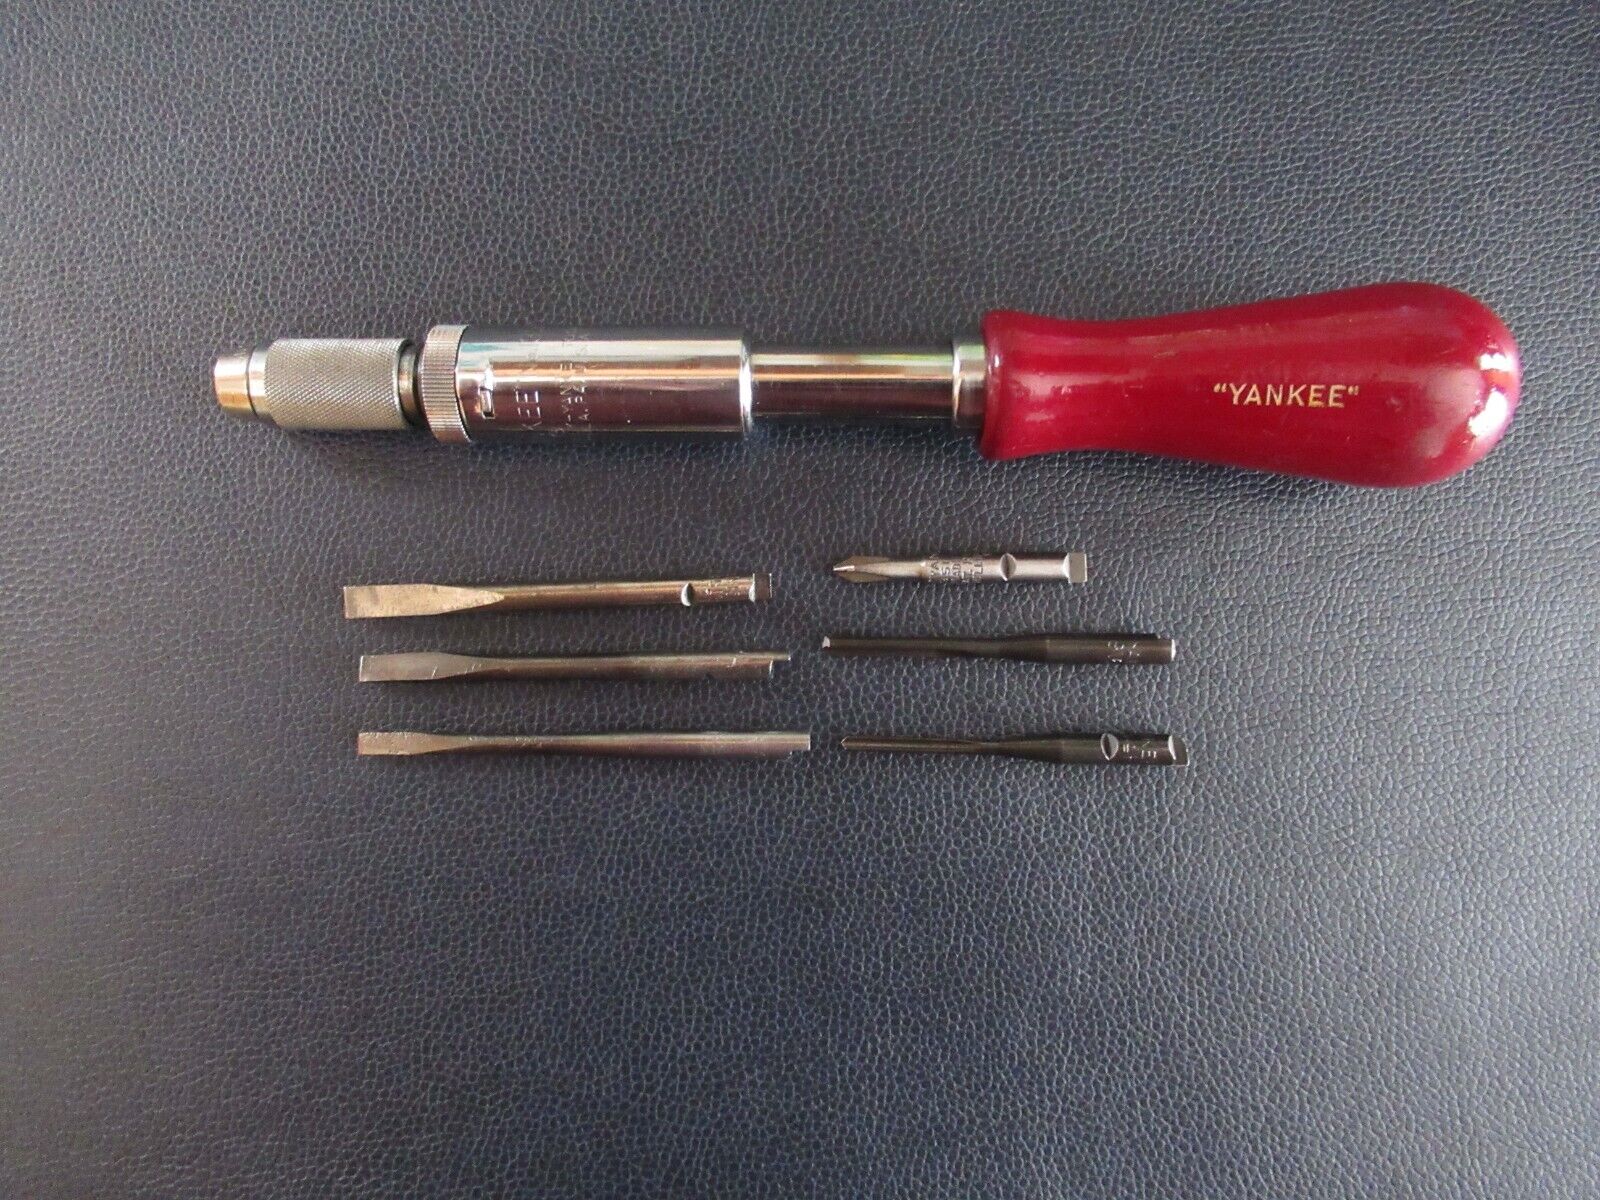 Stanley Yankee No. 135A Spiral Ratchet Screwdriver w/ 6 Bits